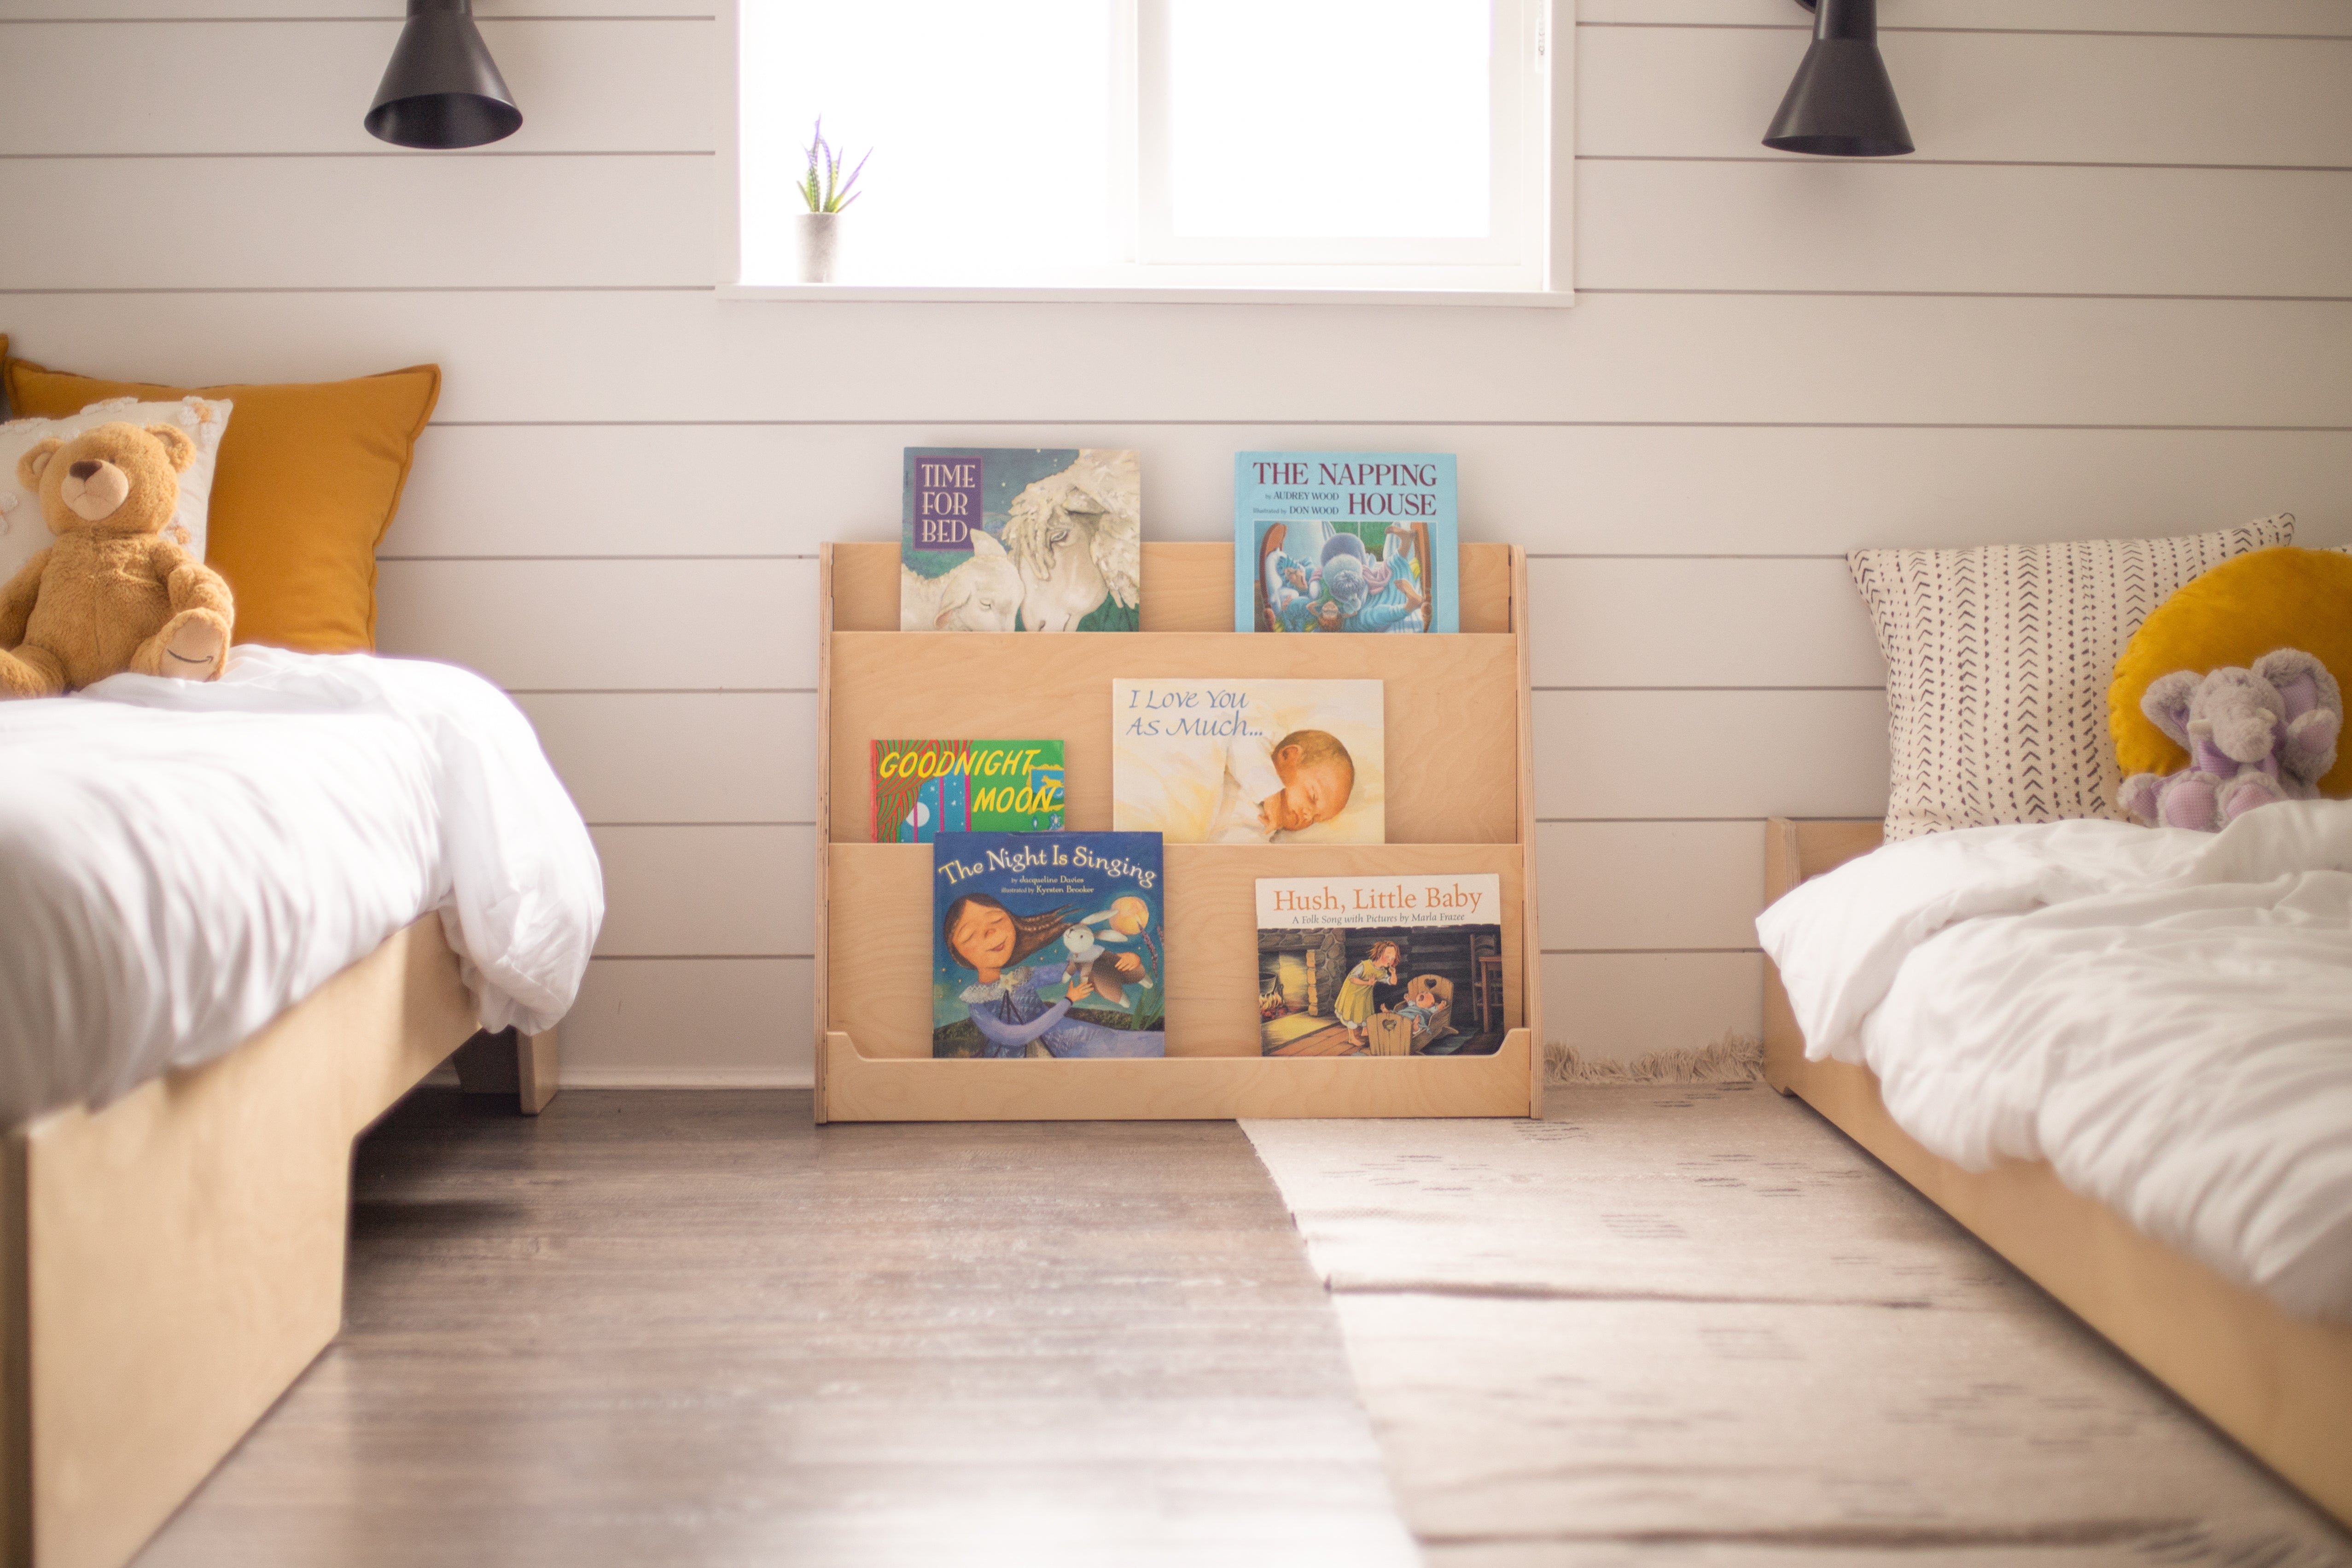 Montessori Bookshelf, Toddler Bookcase, Wooden Kids Furniture